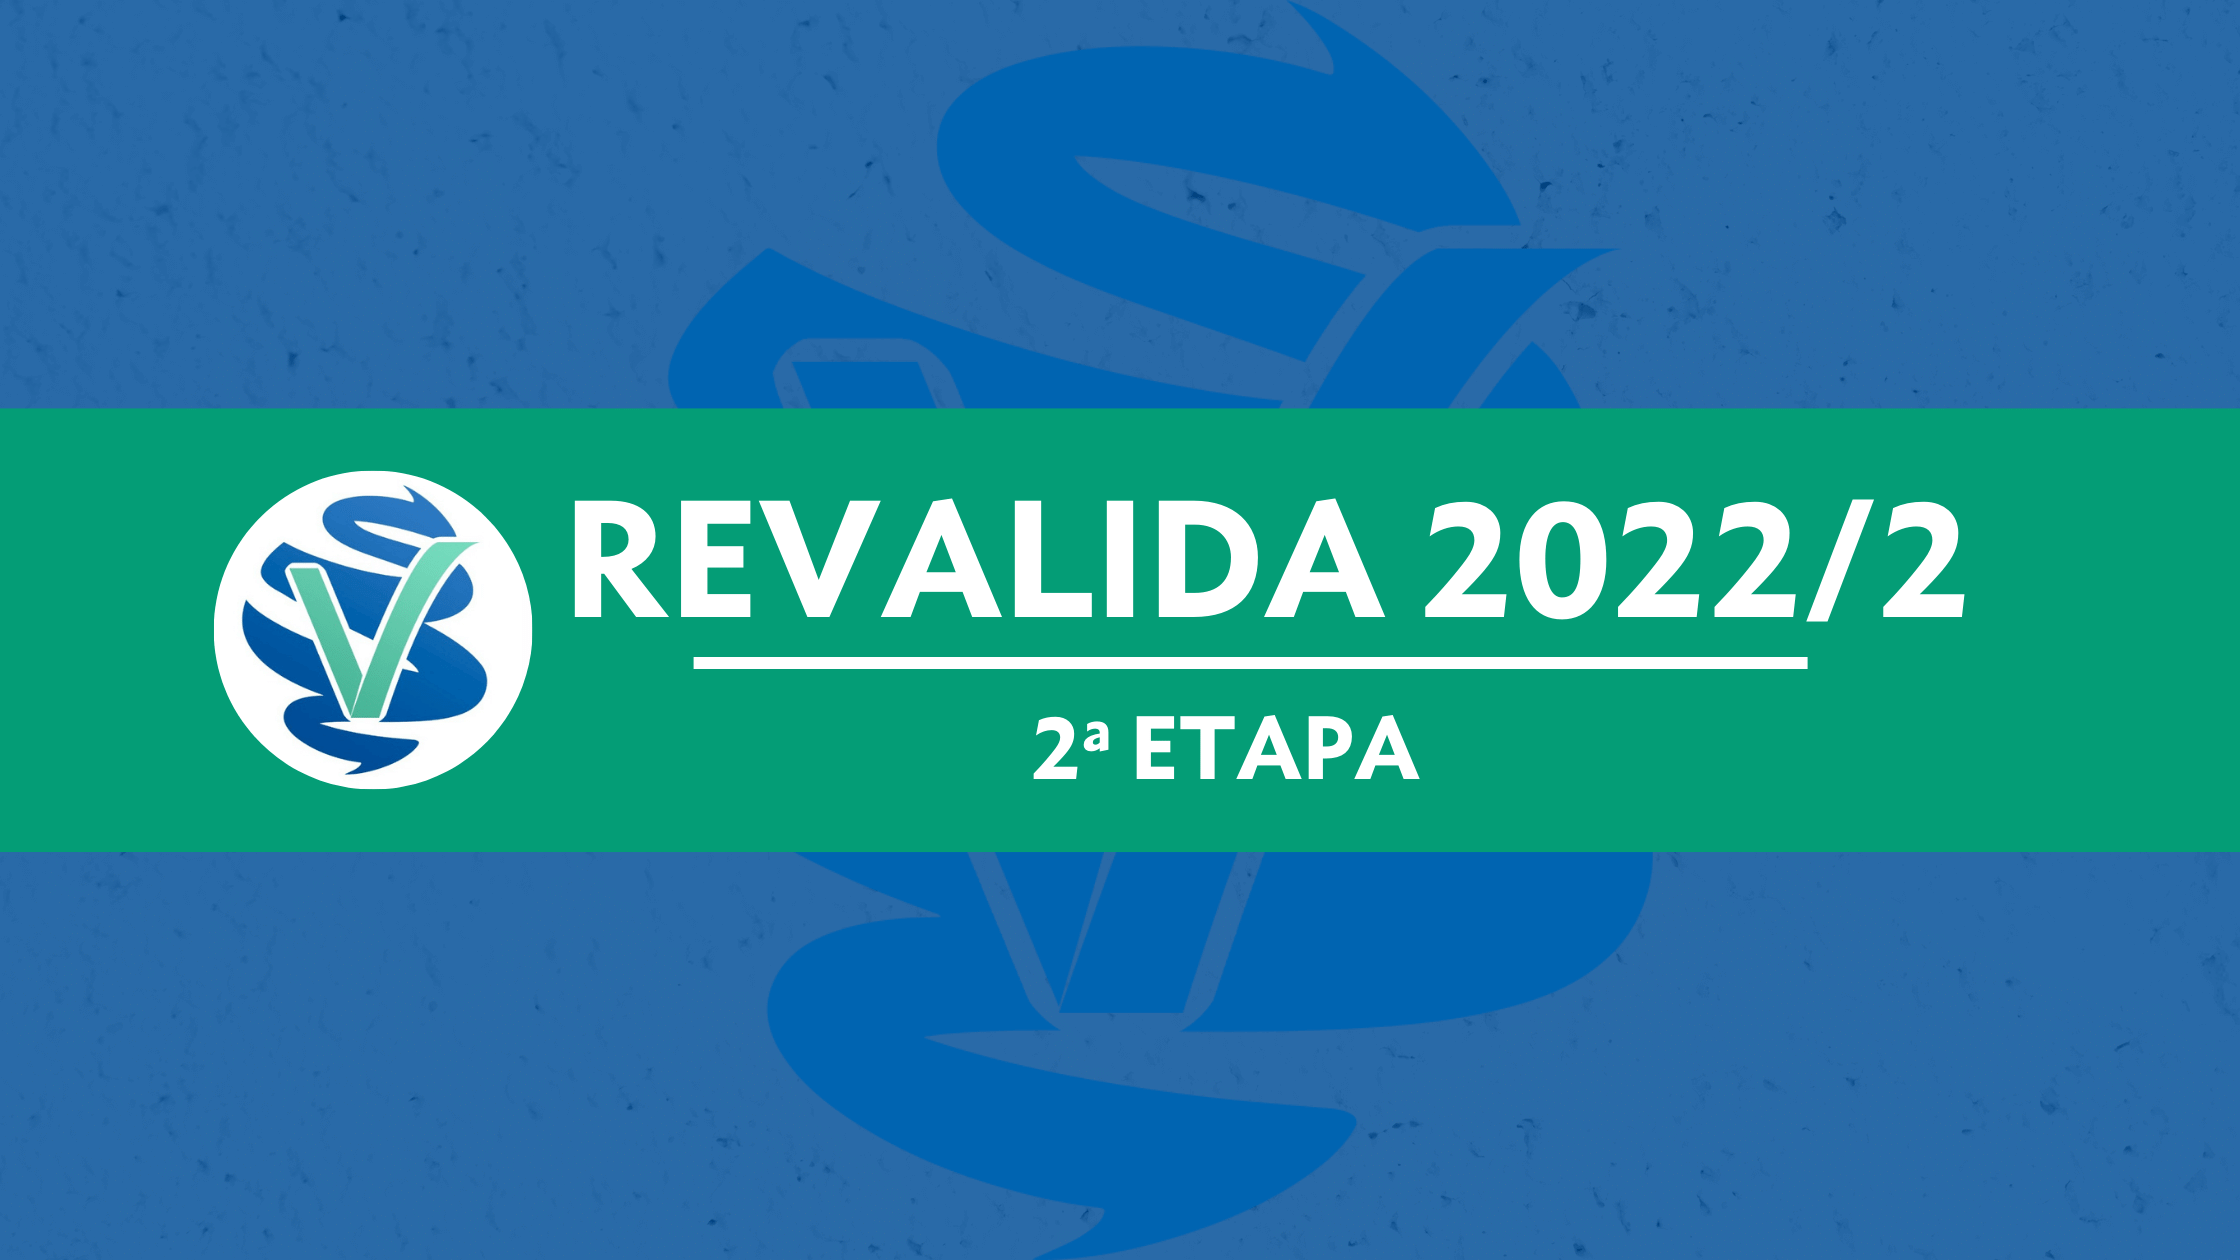 Revalida 2022 2ª ETAPA